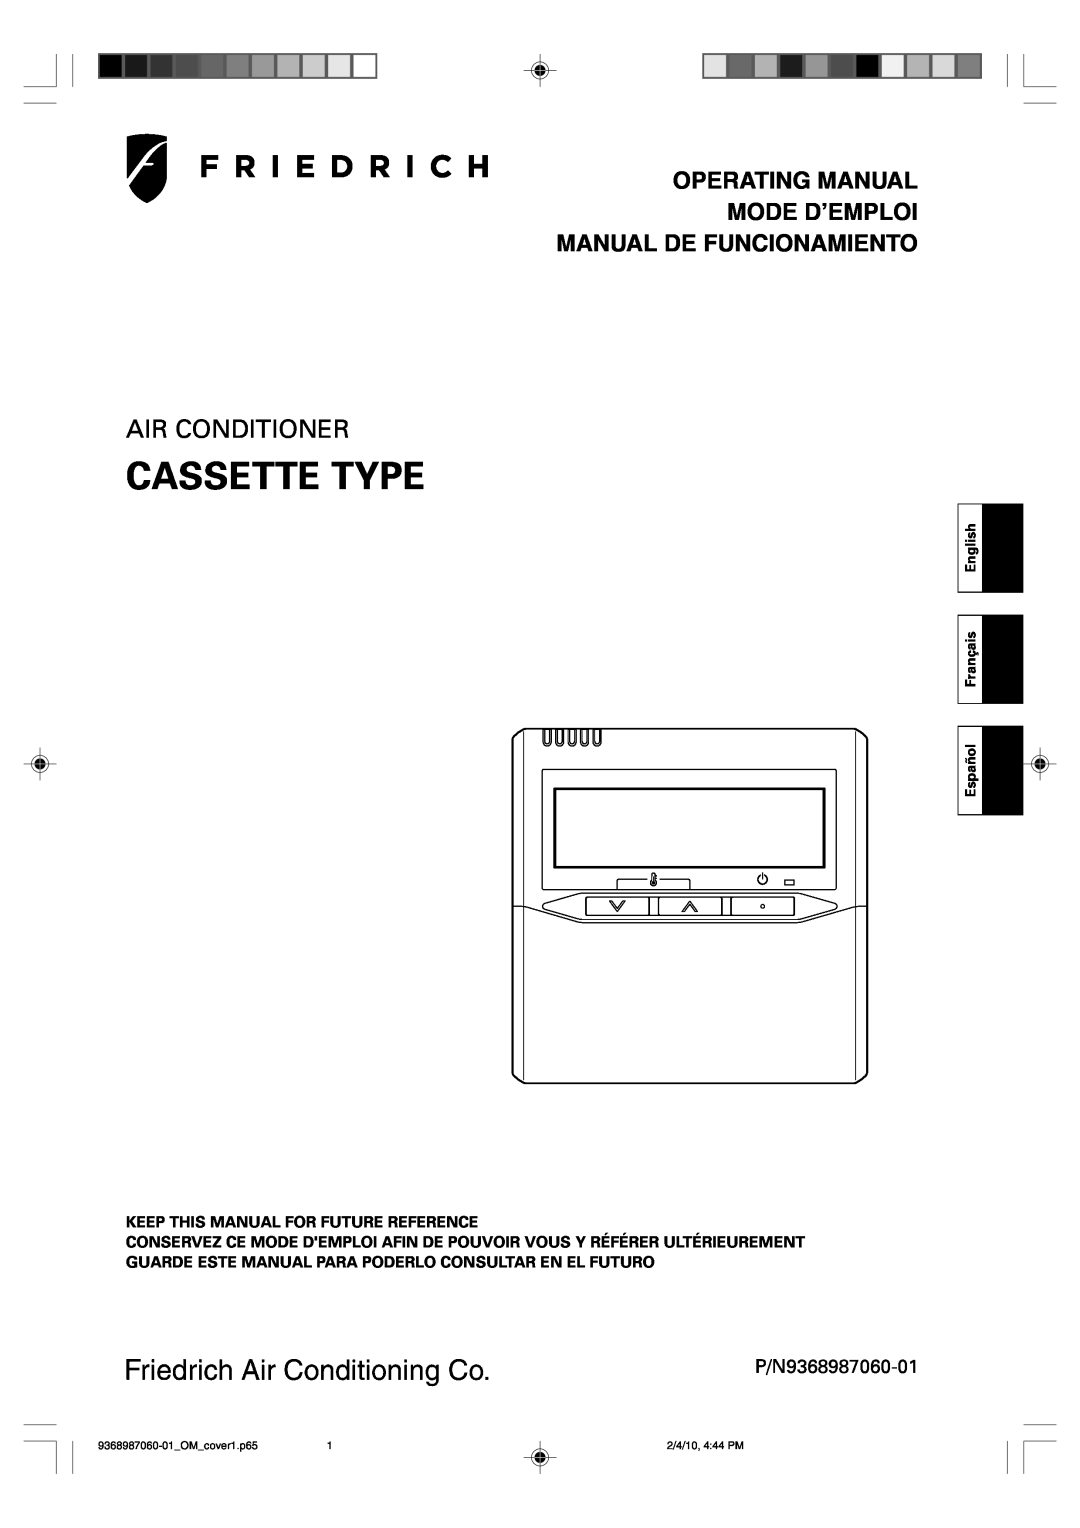 Friedrich P/N9368987060-01 manual Cassette Type, Air Conditioner, Operating Manual Mode D’Emploi, Manual De Funcionamiento 